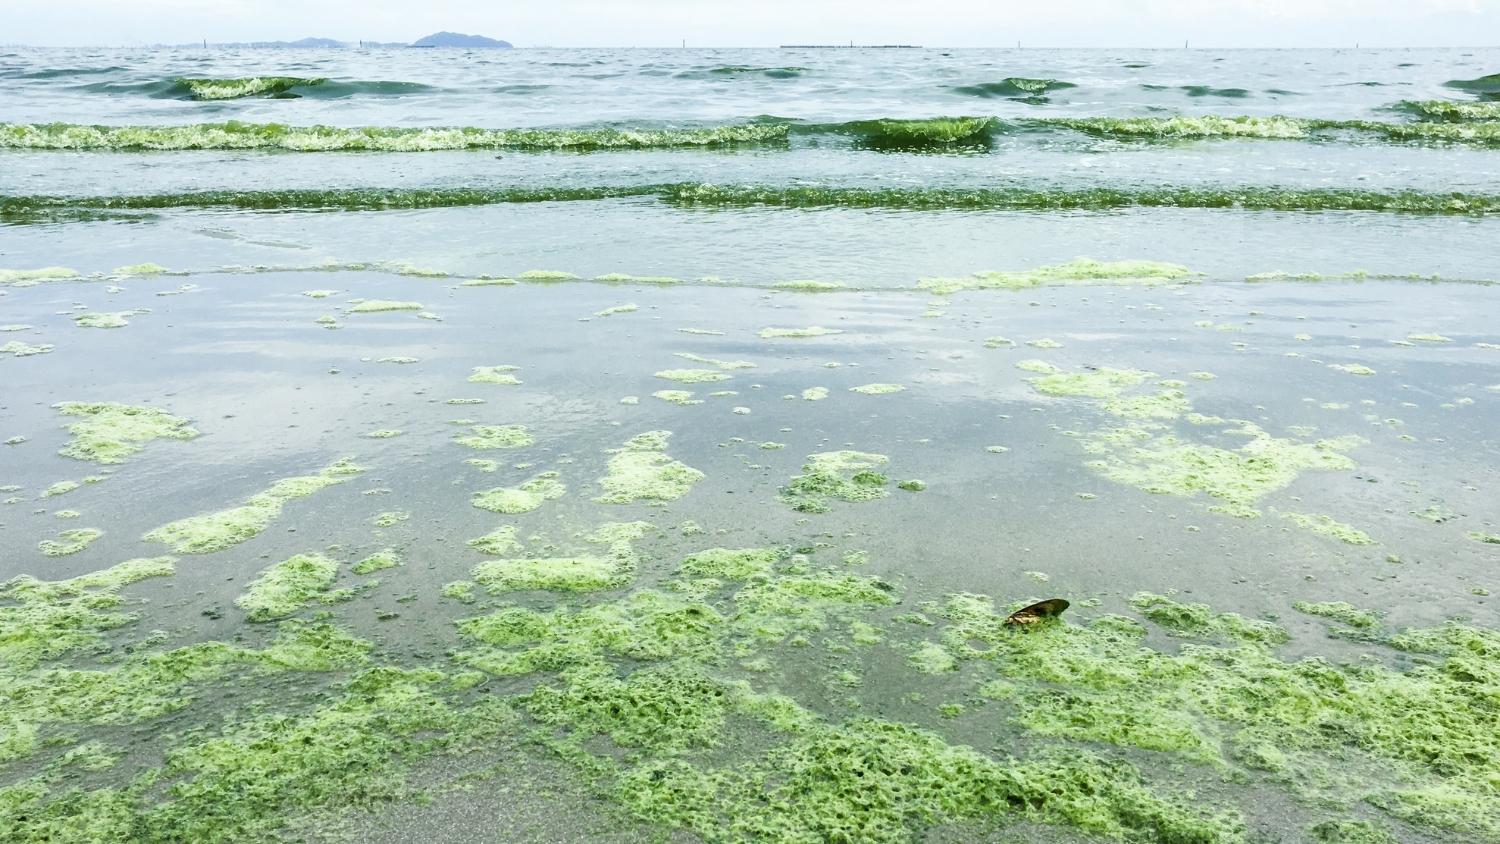 Algae bloom in a pond